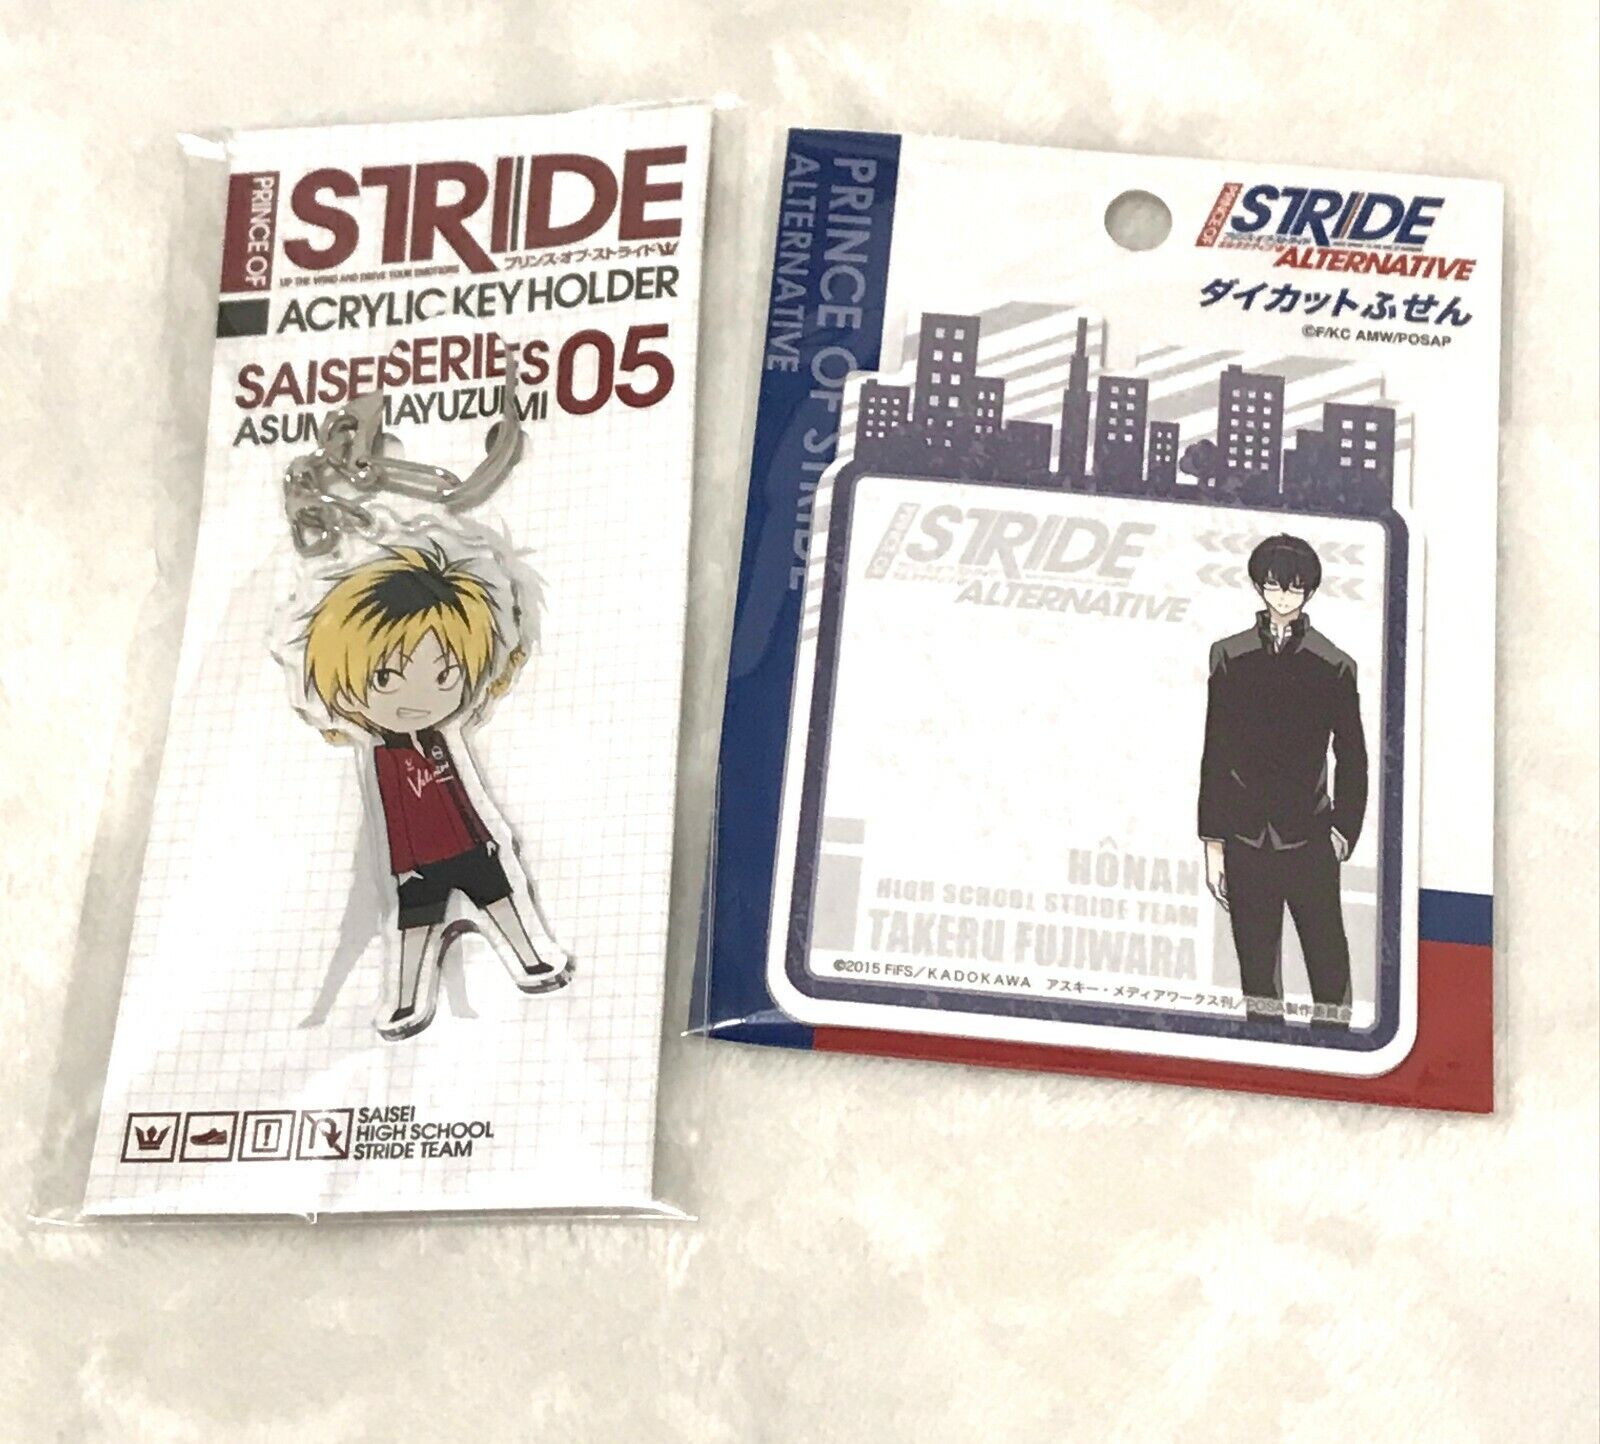 Prince of Stride Alternative, Saisei Mayuzumi Keychain and Honan Fujiwara Notes